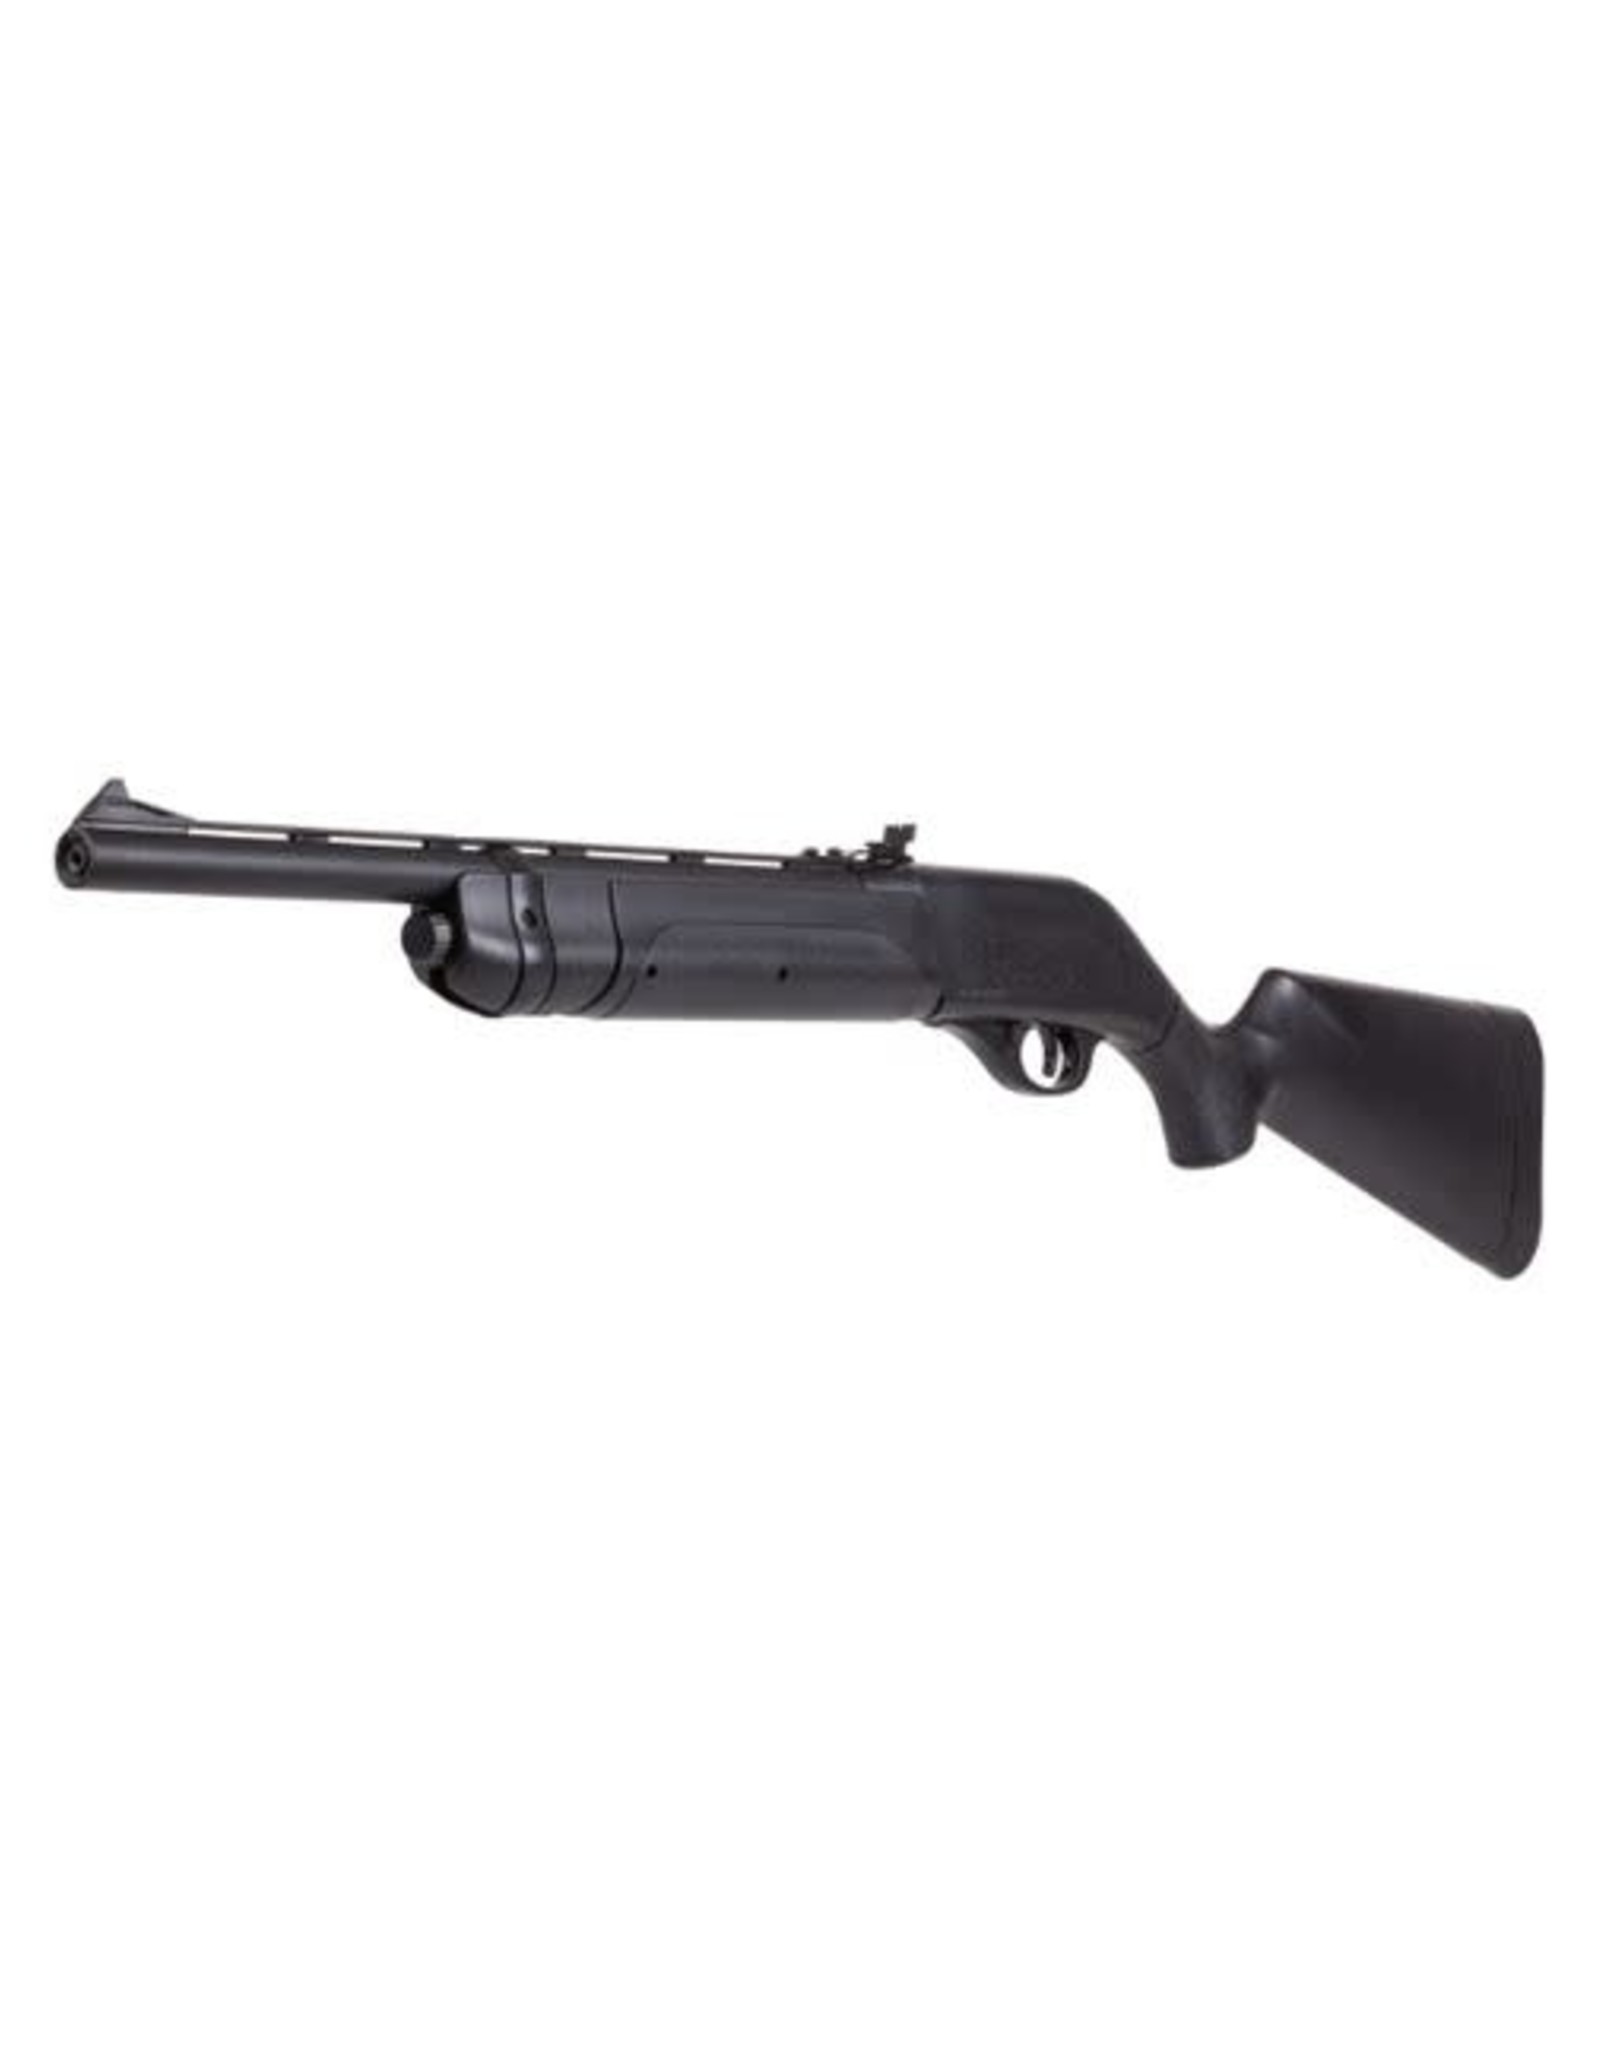 Remington .177 (4.5mm) Cal. Remington 1100 Variable-Pump Air Rifle - Single Round Pellet / 1000 Rounds BBs